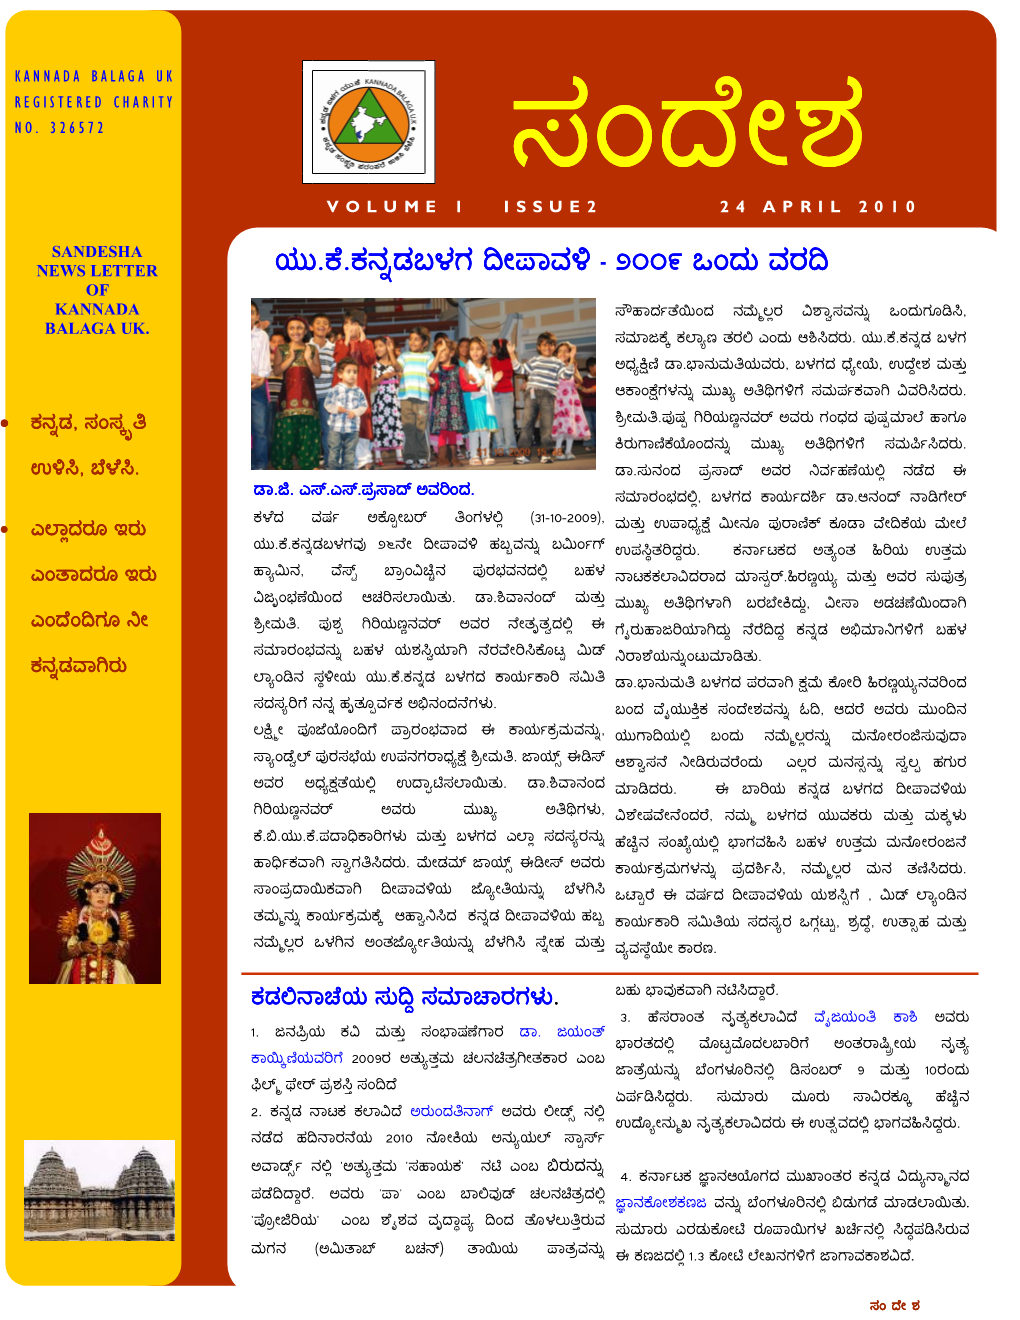 April 2010 Sandesha - News Letter ����....ಕ�ಕ�ಕ�ಕ�....�������������� ��ಪ��� ���� ���� ��� of Kannada ಸ�ಹ���ತ���� ������ �ಶ������� ��������, Balaga Uk